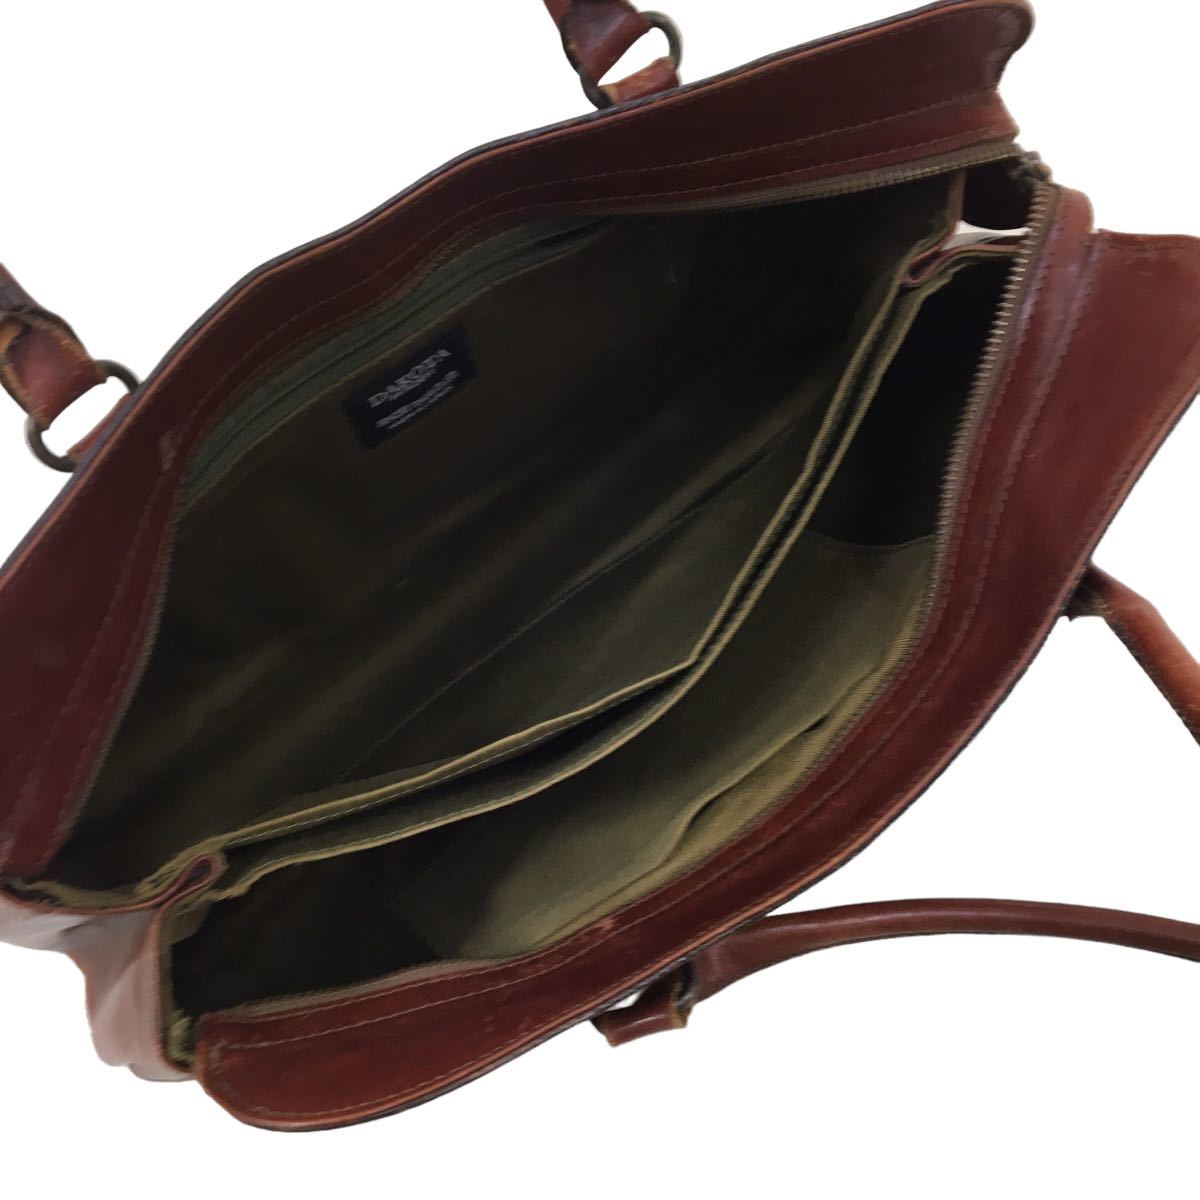 D491 日本製 Dakota ダコタ 本革 レザー 皮革 ハンドバッグ 肩掛け 手持ち かばん カバン 鞄 バッグ BAG ブラウン_画像7